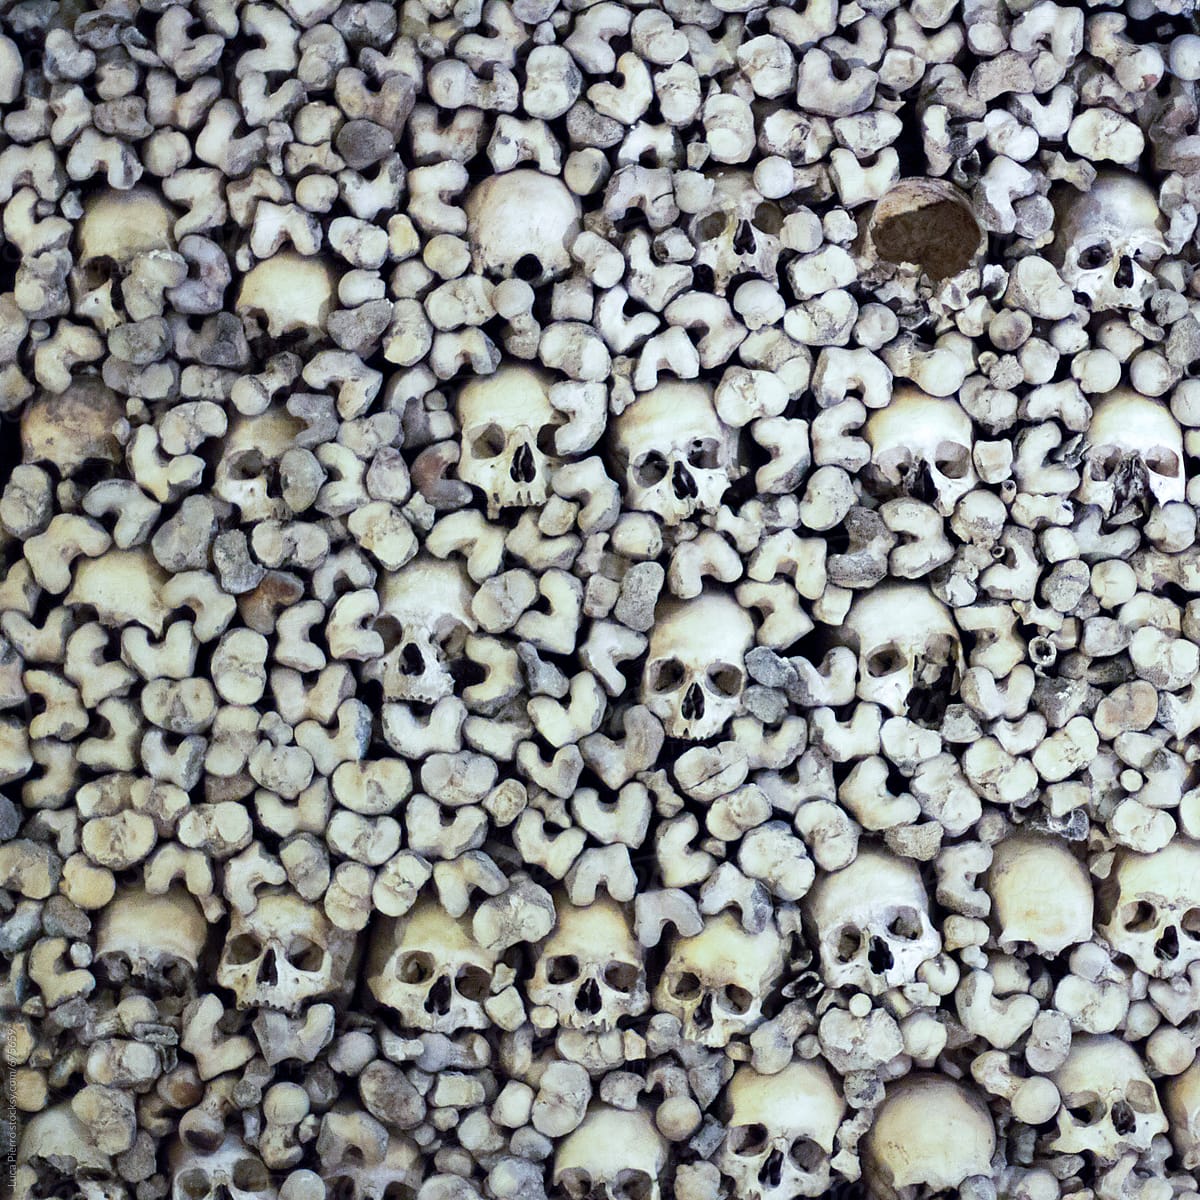 Pattern of skulls and bones